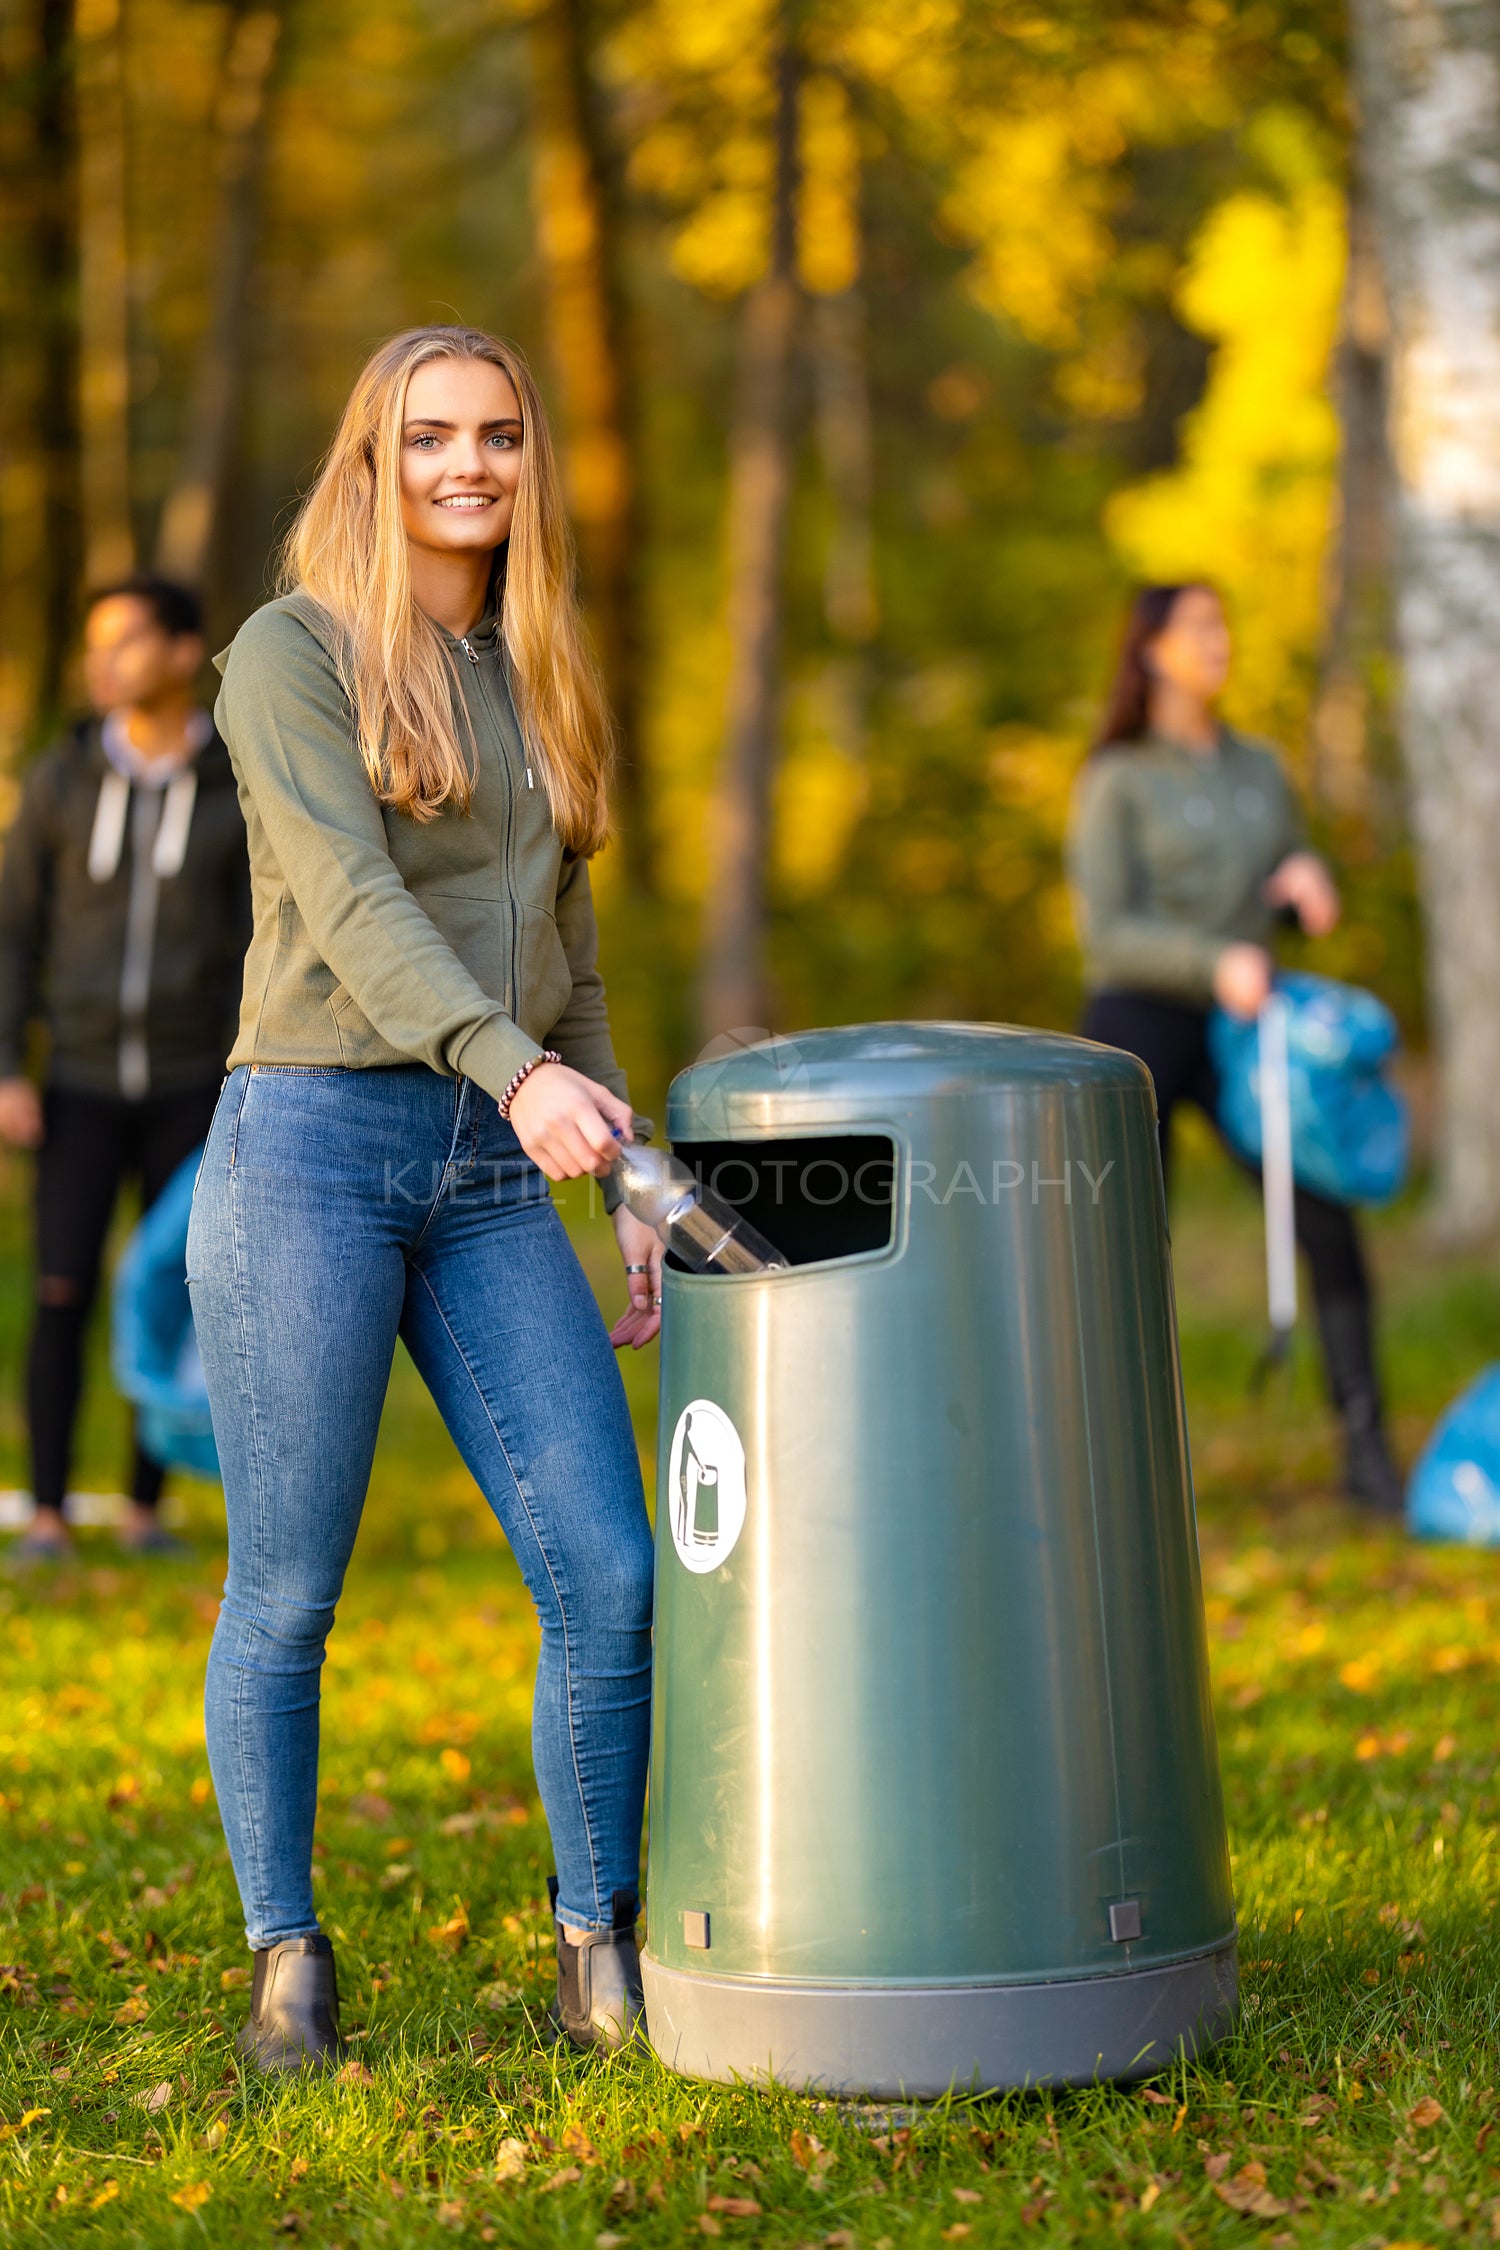 Smiling young woman putting bottle in garbage bin